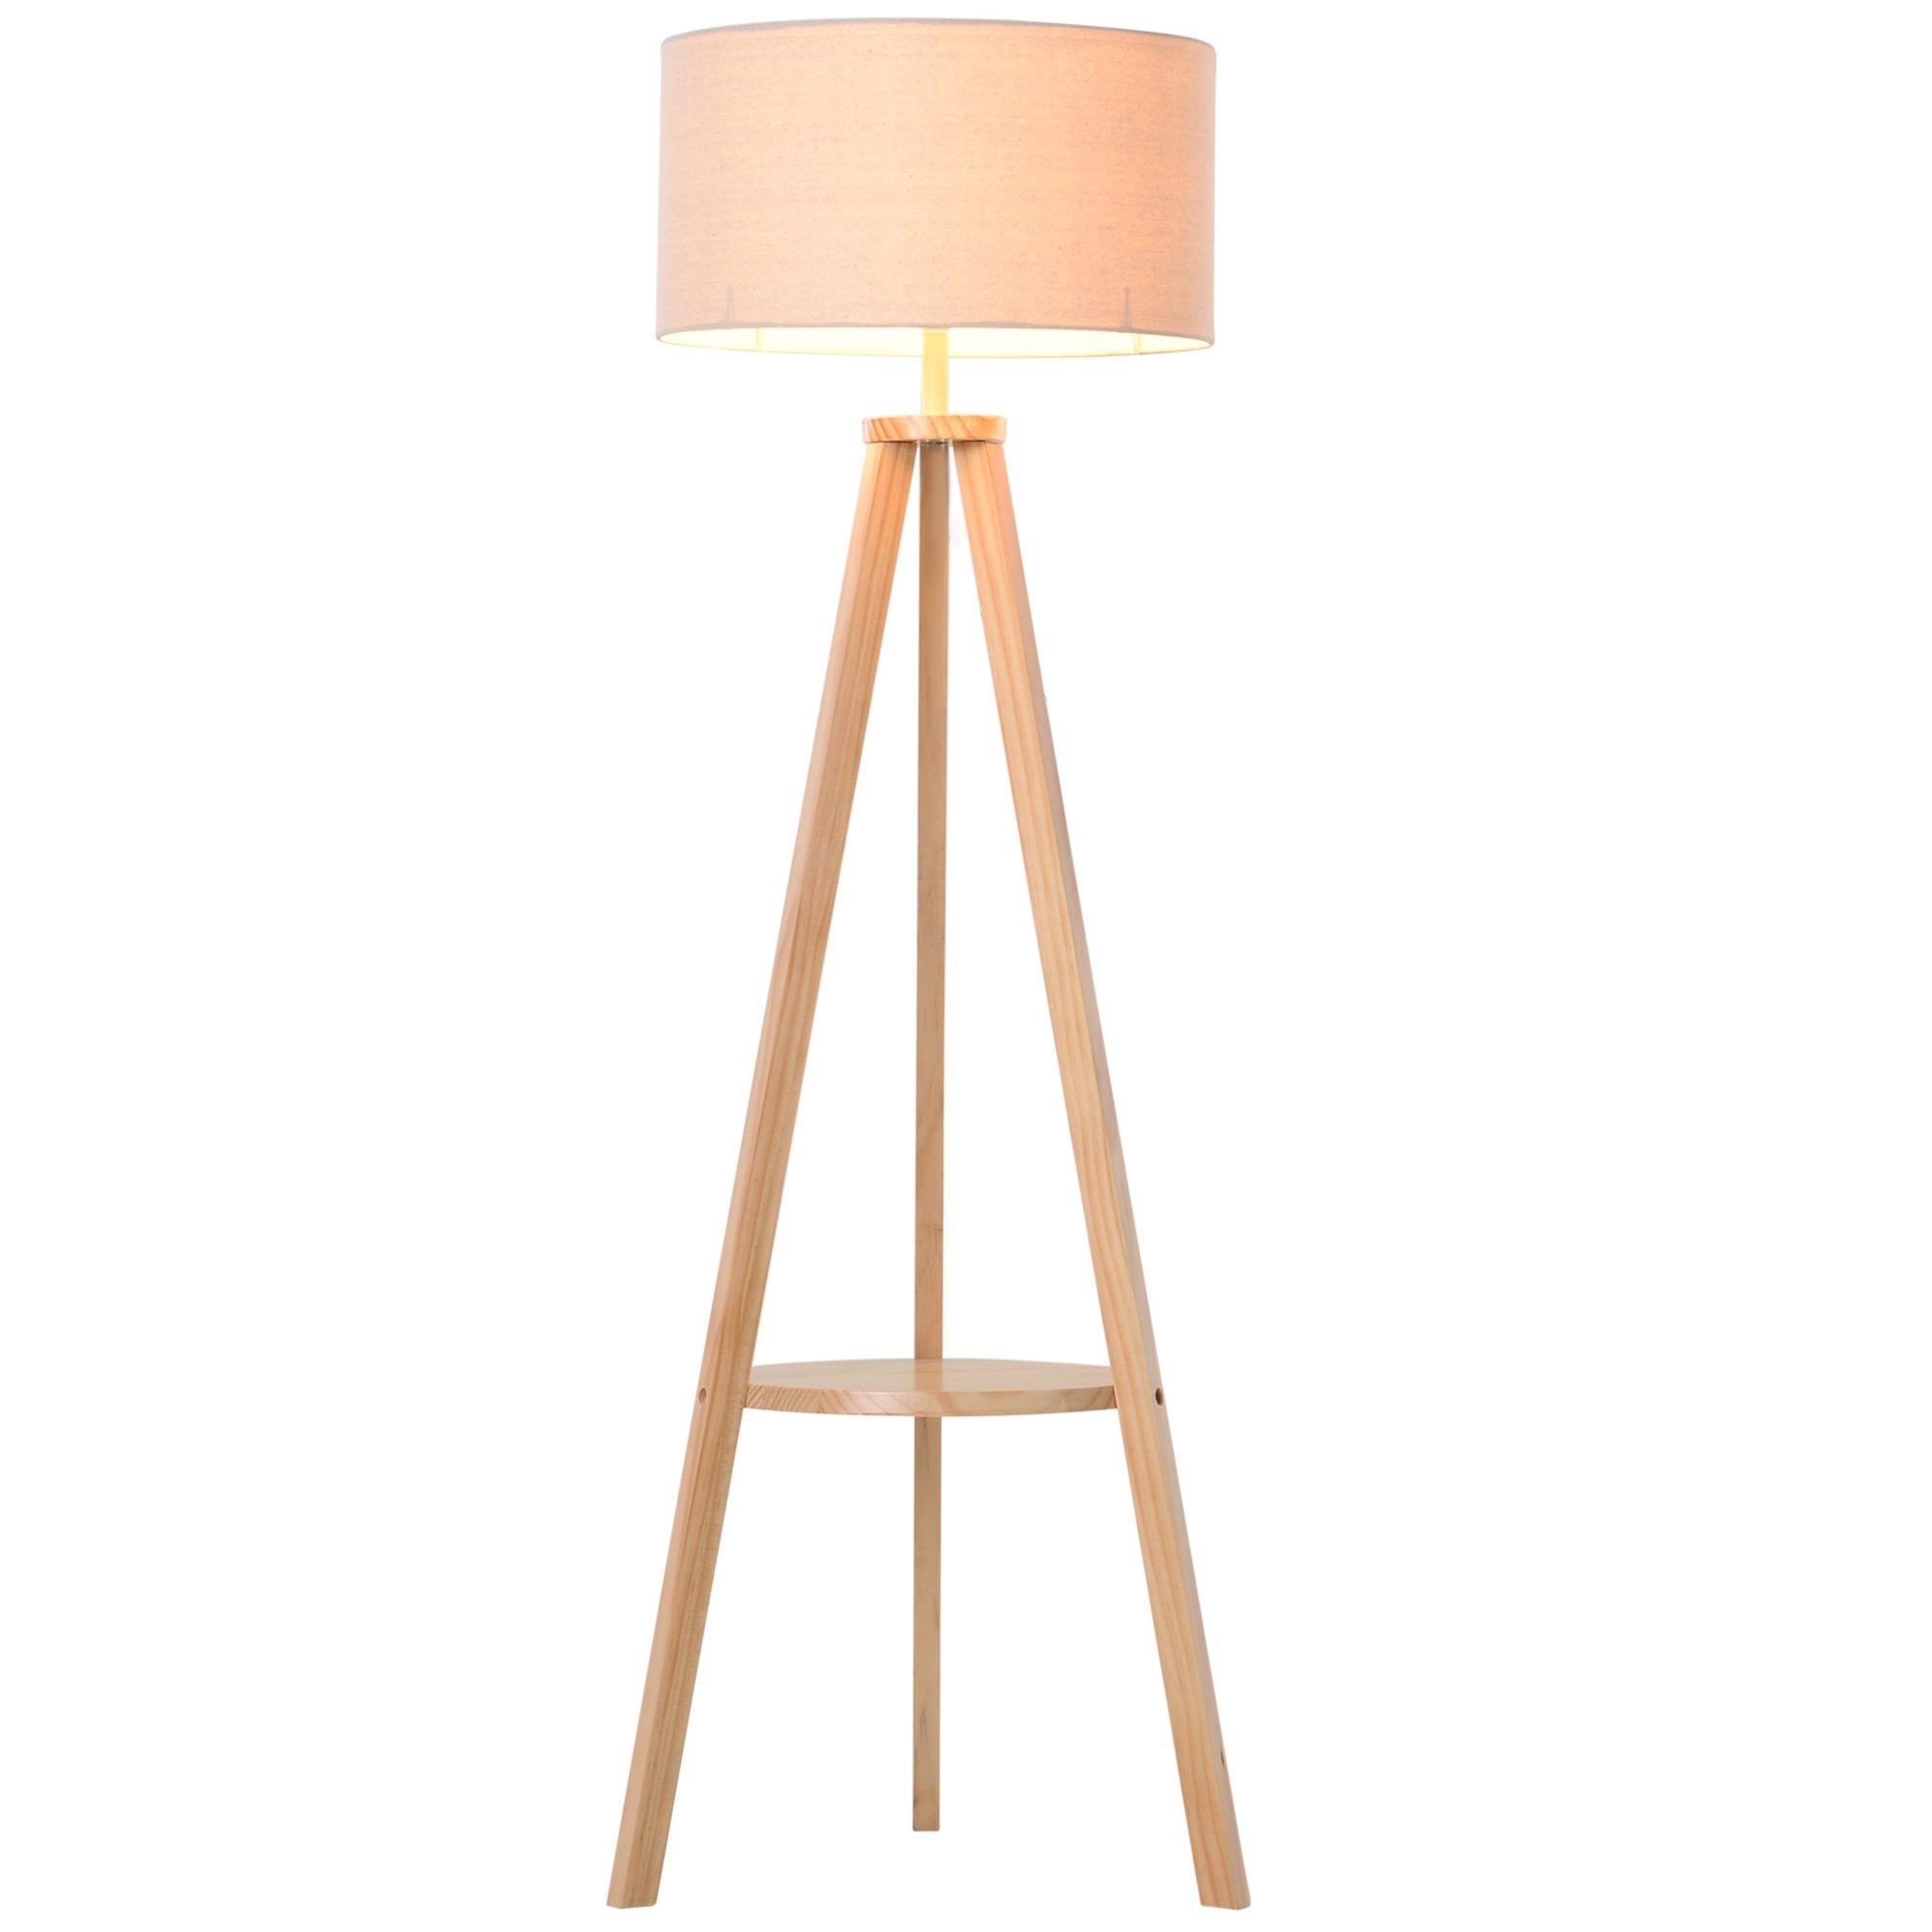 HOMCOM Floor Lamp - 154H cm-Beige/Natural Wood Colour  | TJ Hughes Natural